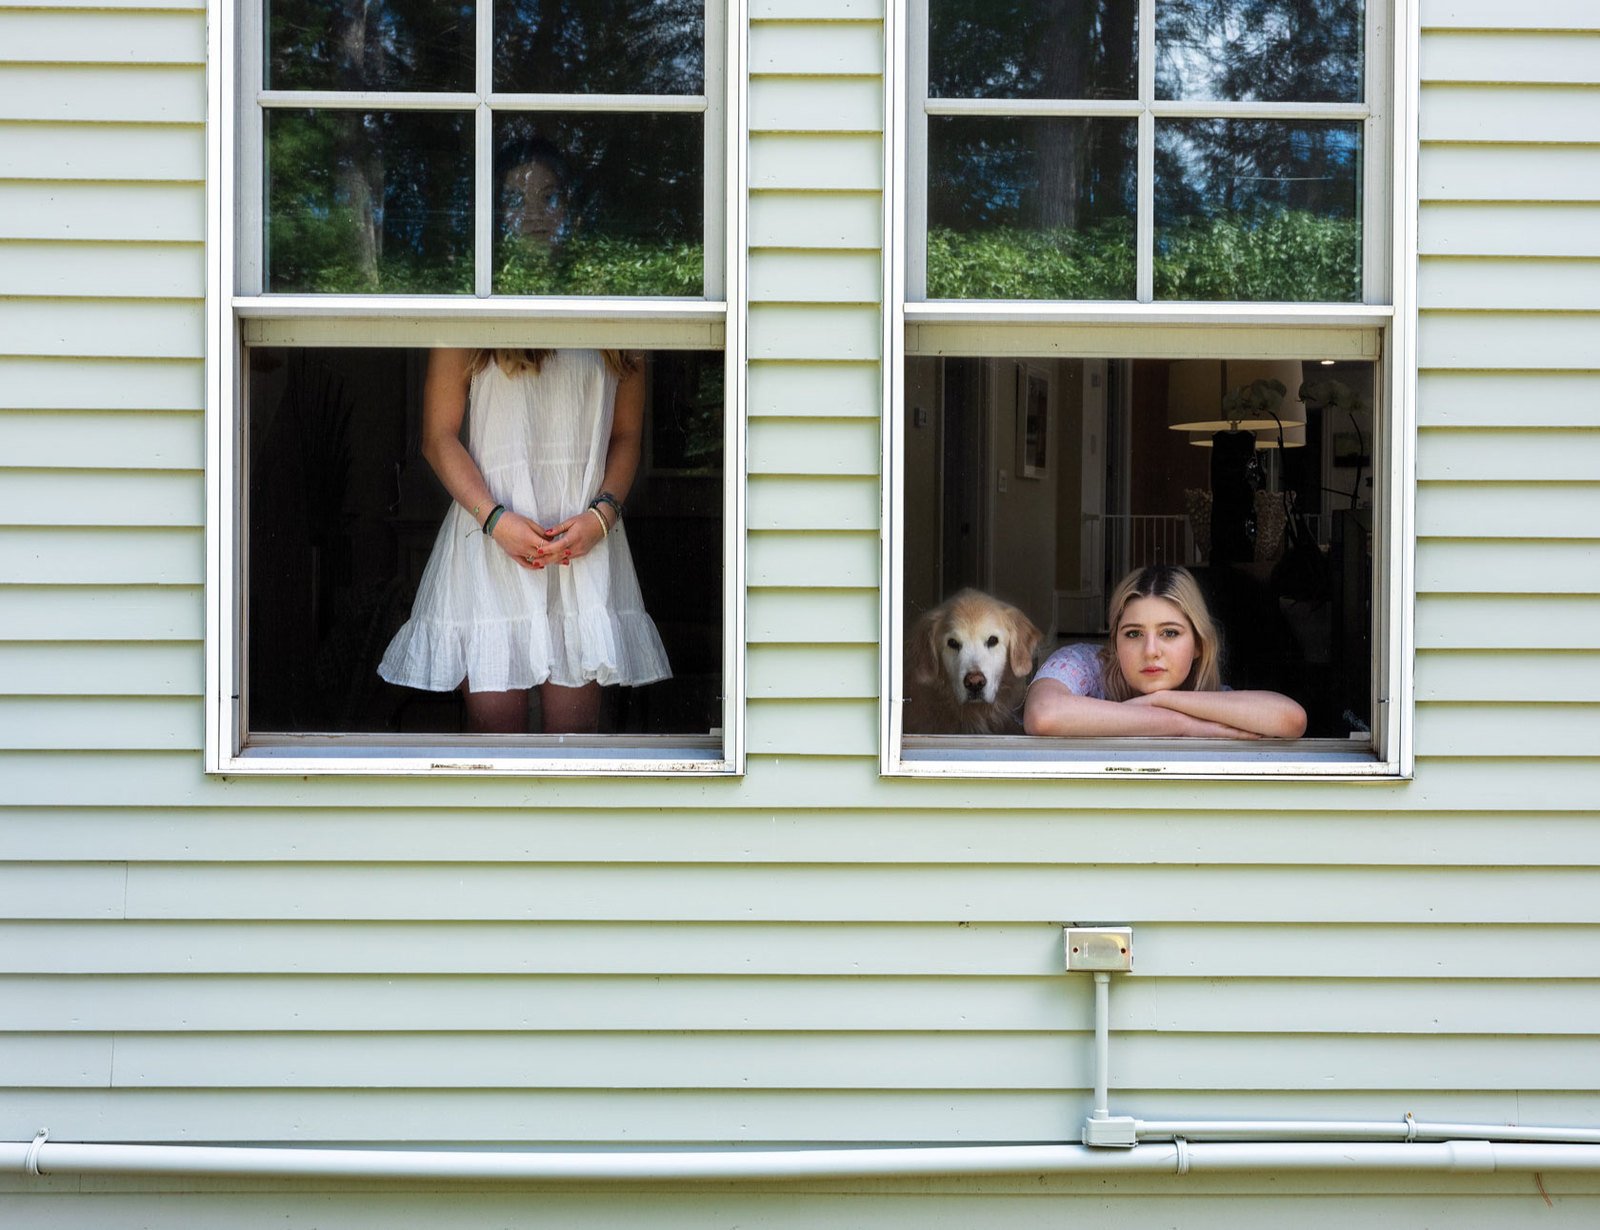 Rania Matar,&nbsp;Sydney, Nathalie and Sunny the Dog, Weston, Massachusetts, 2020